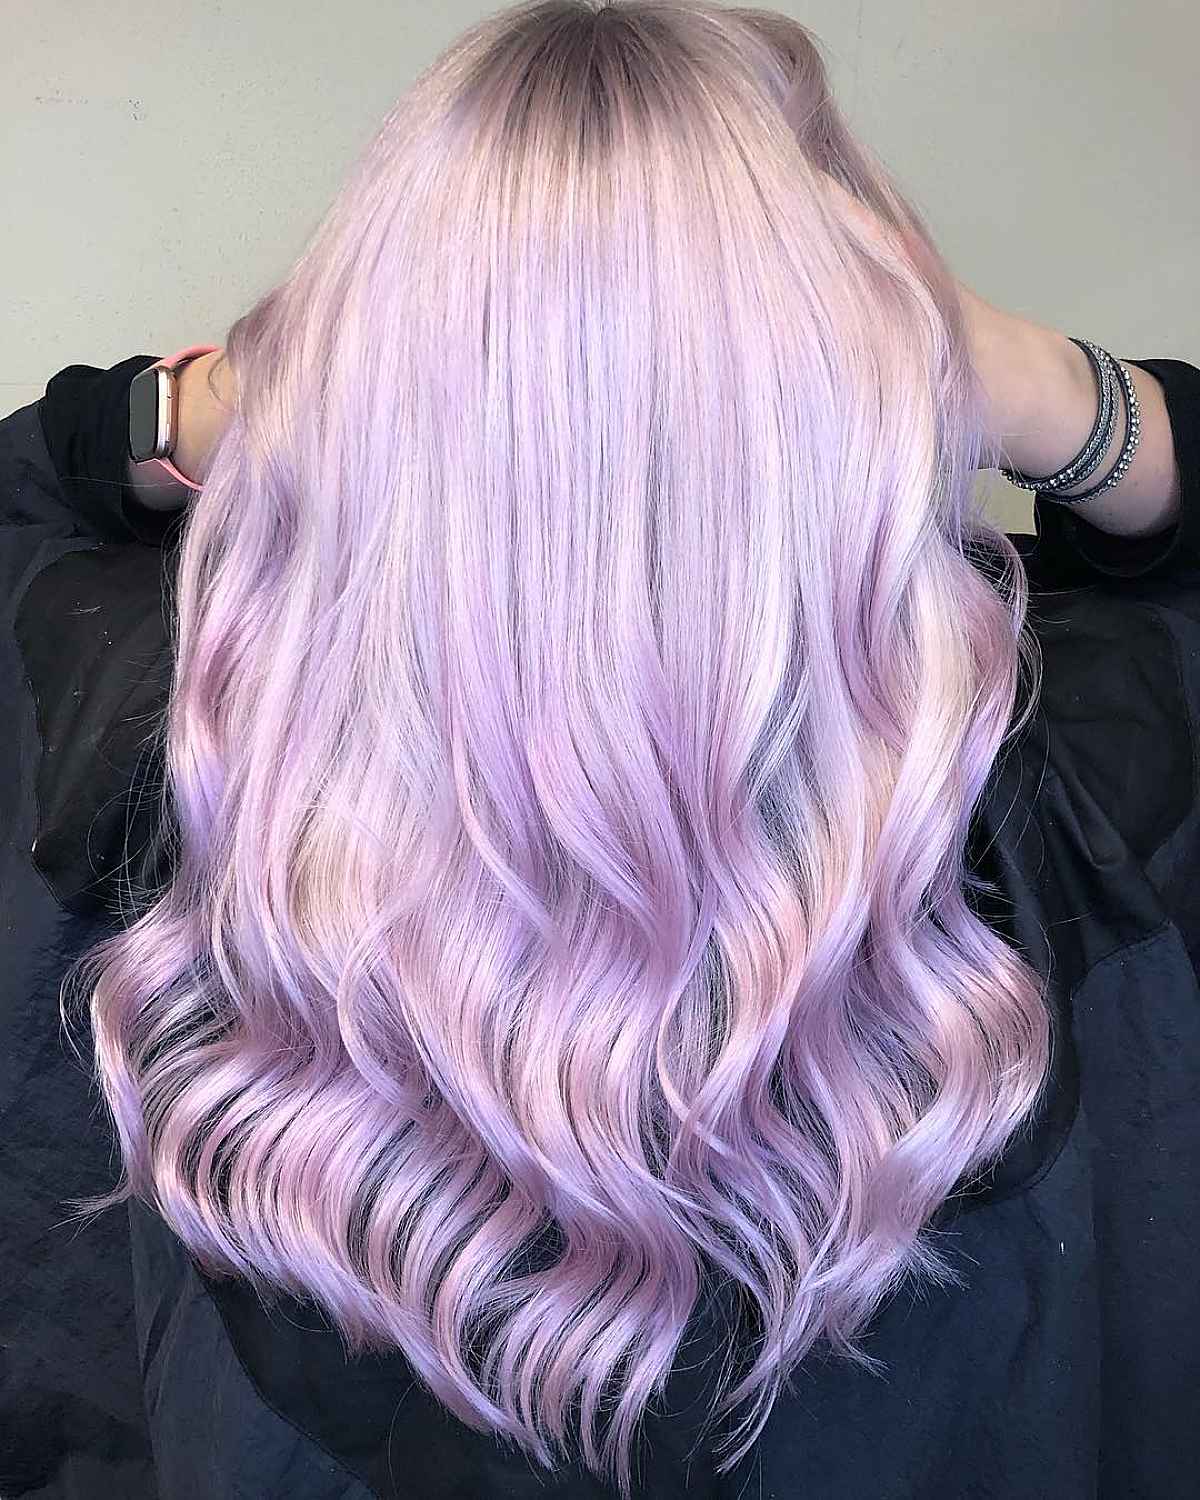 Light purple hair with platinum highlights